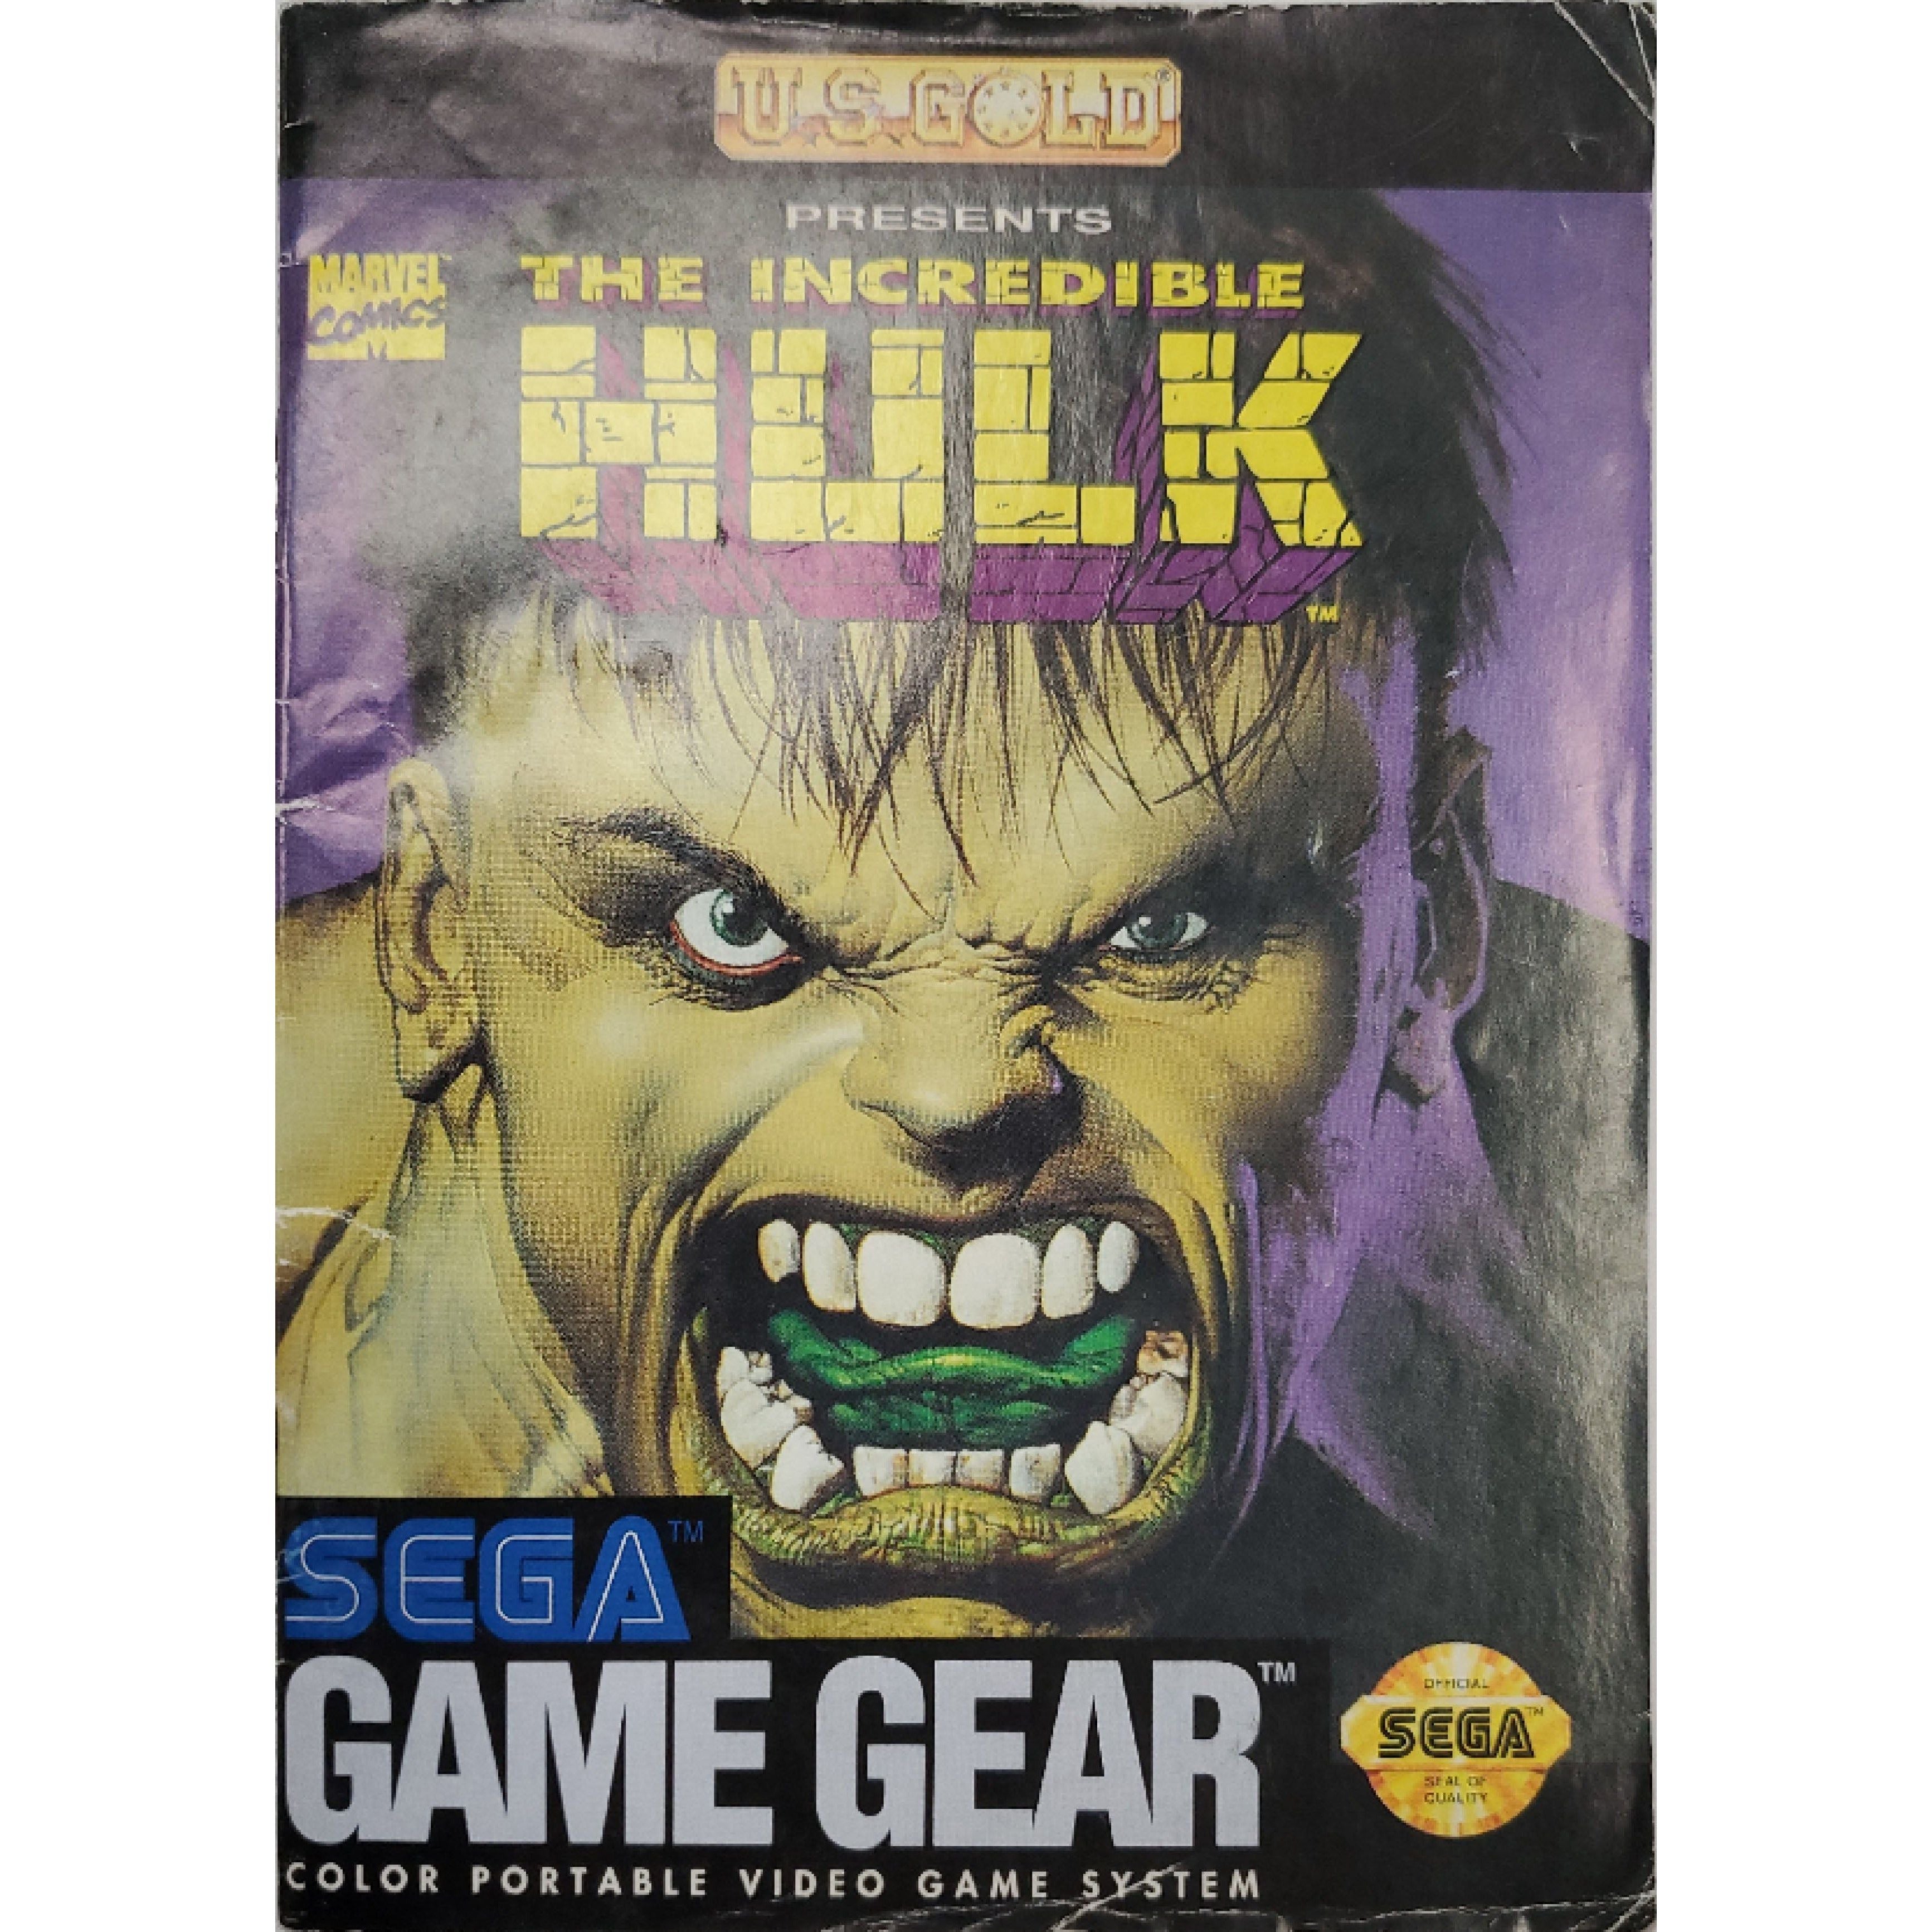 GameGear - The Incredible Hulk (Manual)